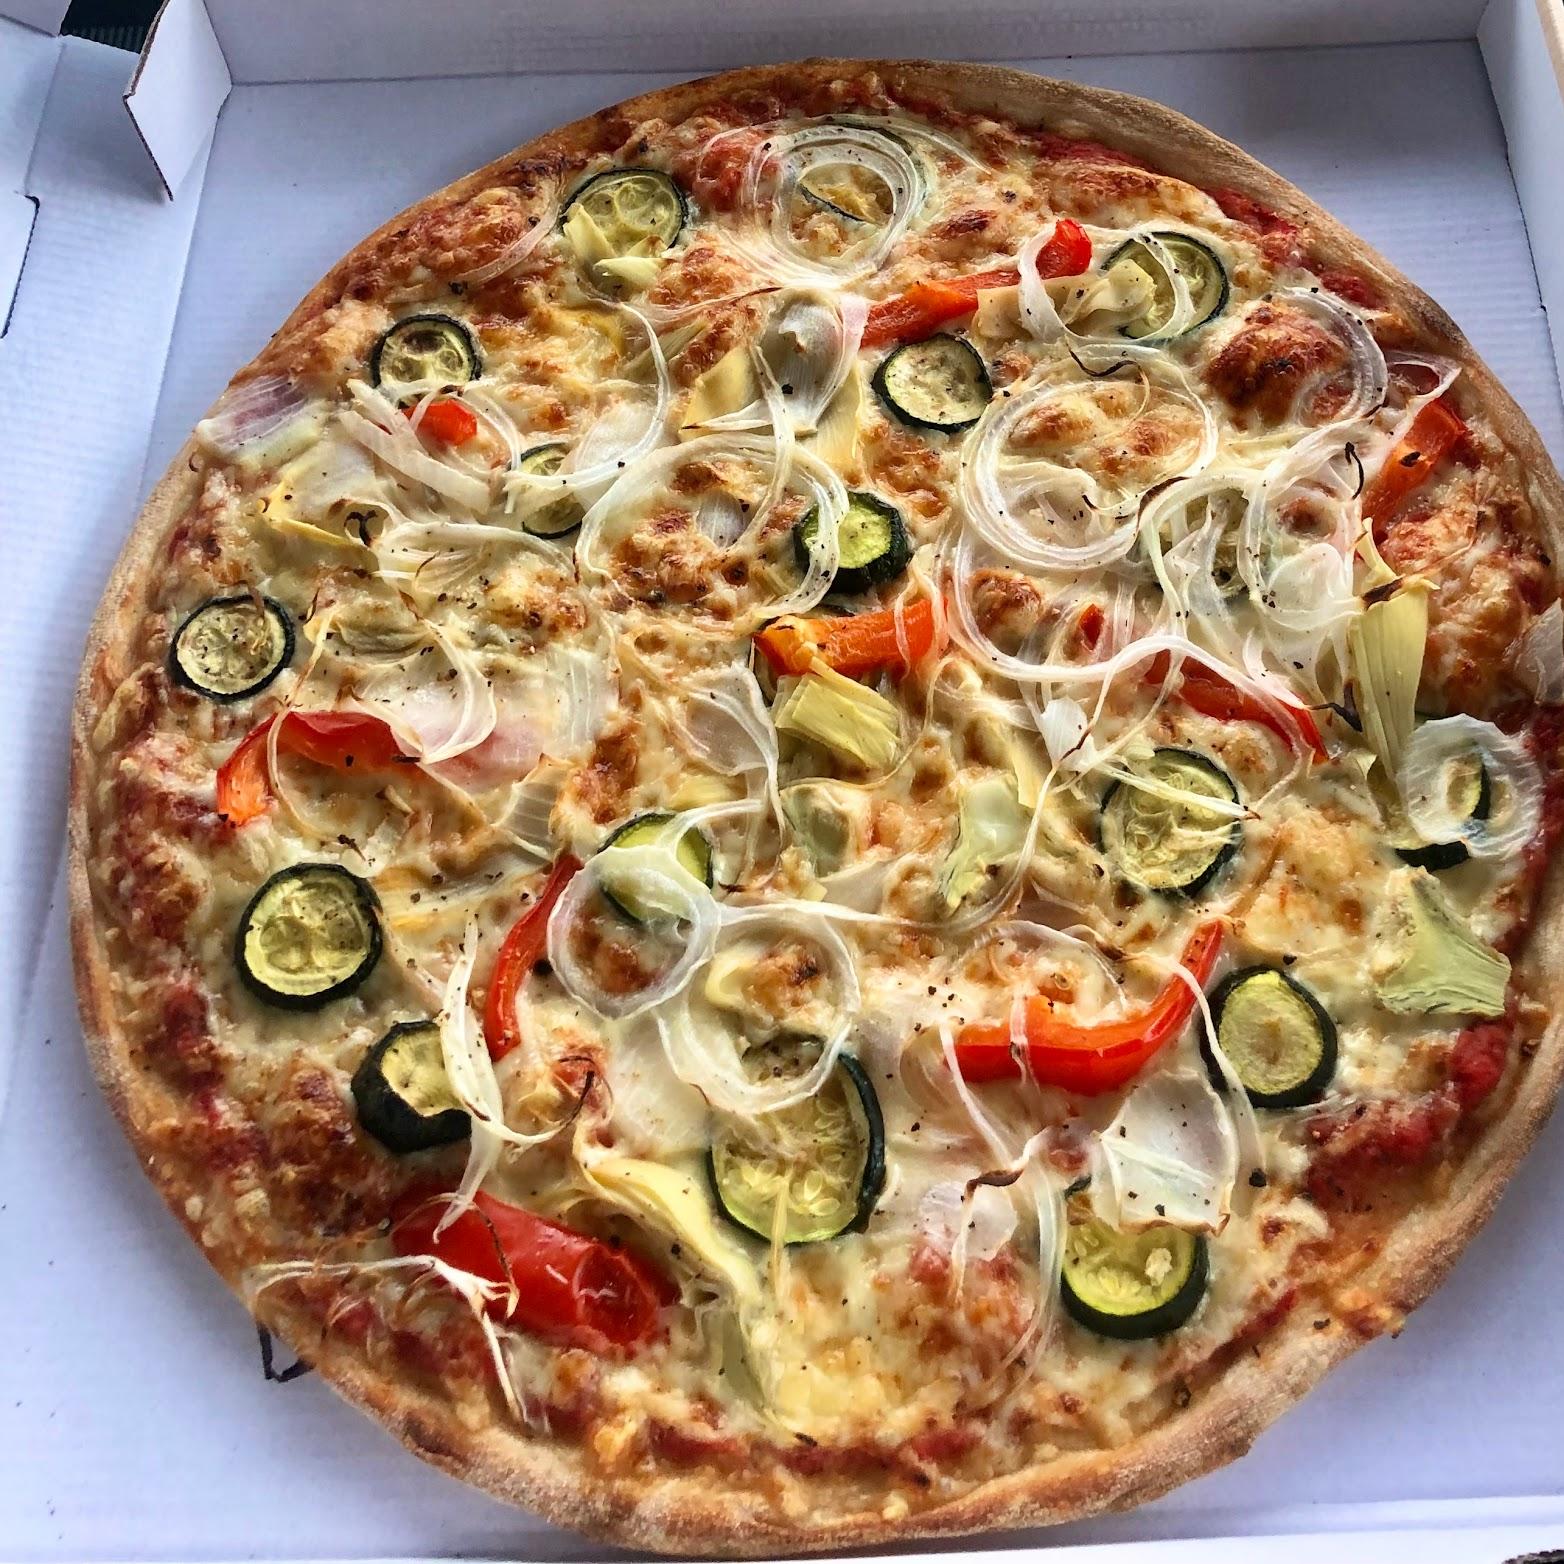 Restaurant "Silvio’s Pizza" in Gries